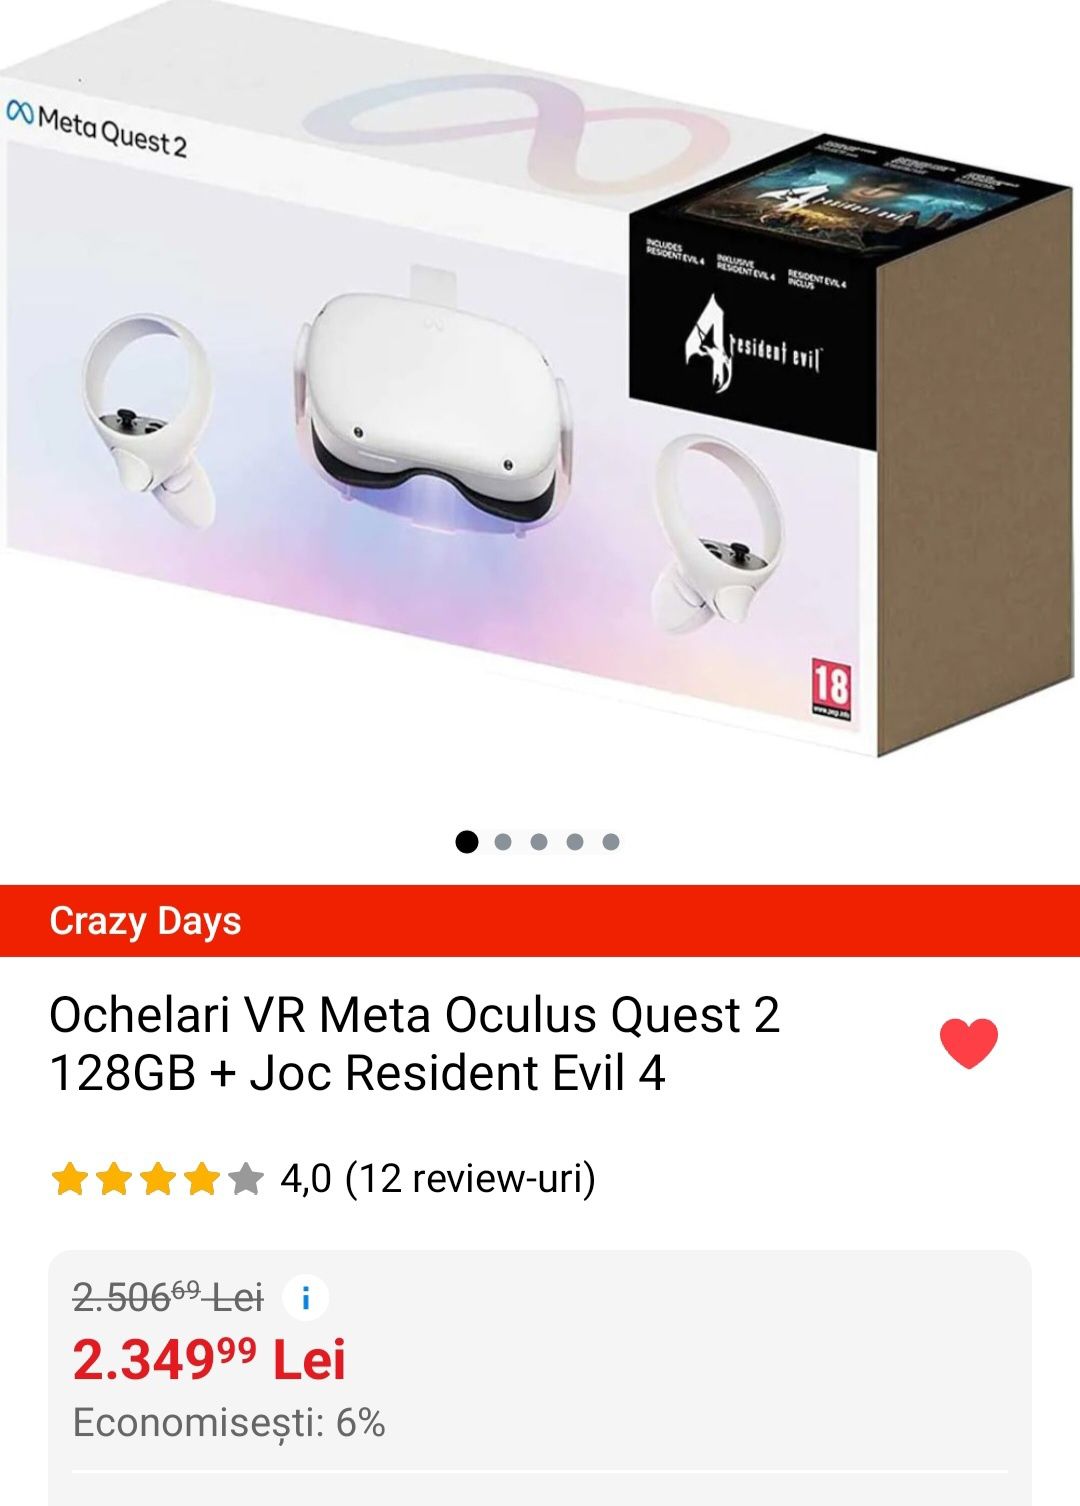 Ochelari VR Meta Oculus Quest 2 128GB + Joc Resident Evil 4